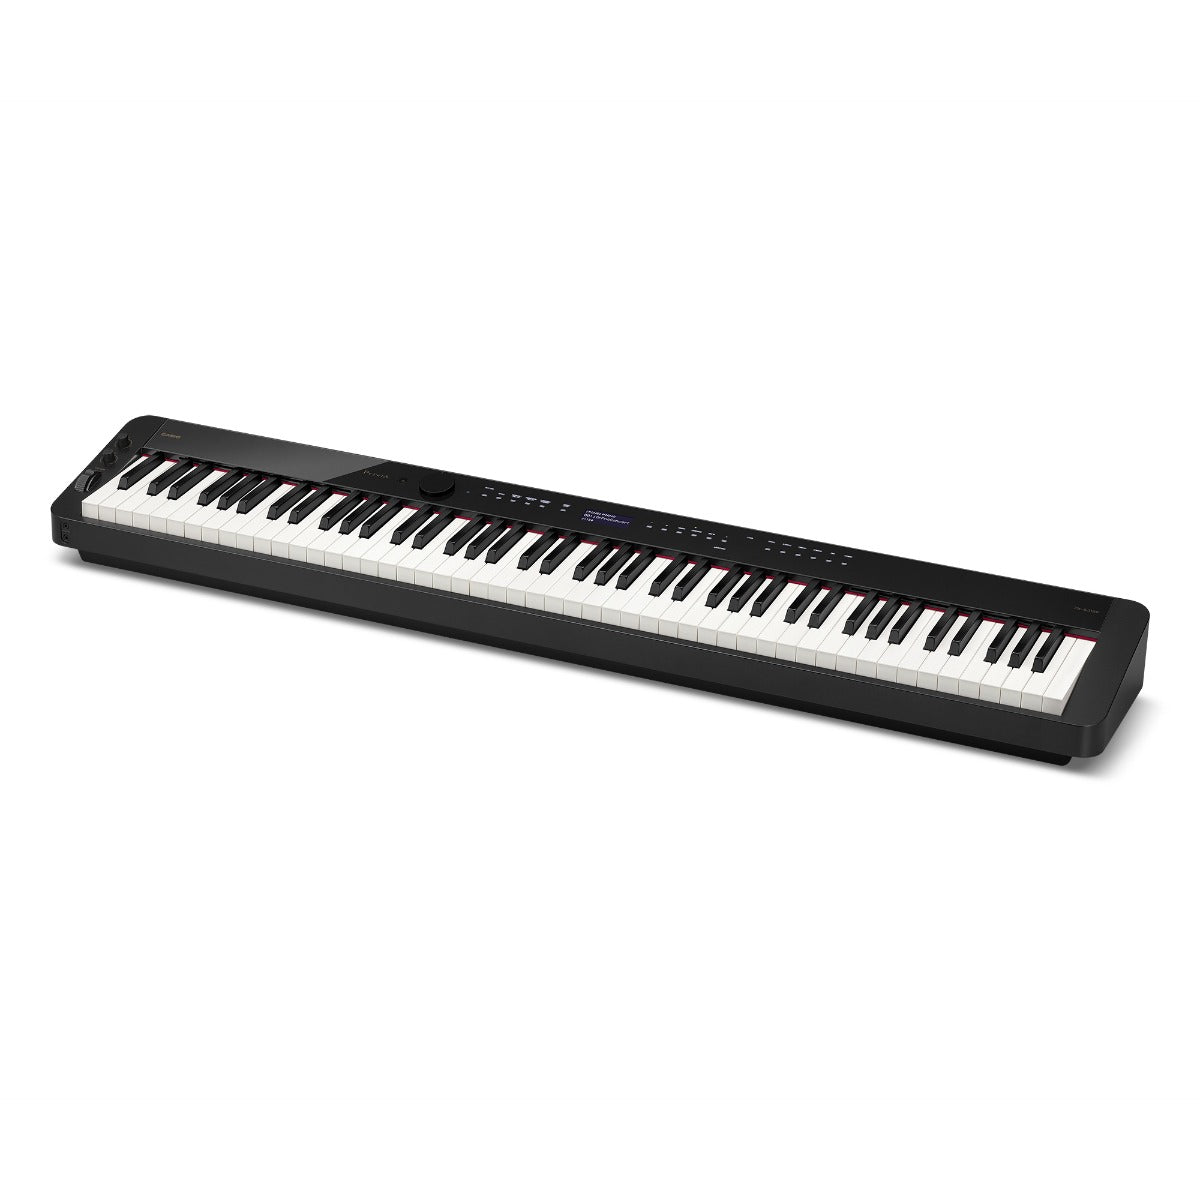 Casio PX-S3100 Digital Piano - Black KEY ESSENTIALS BUNDLE